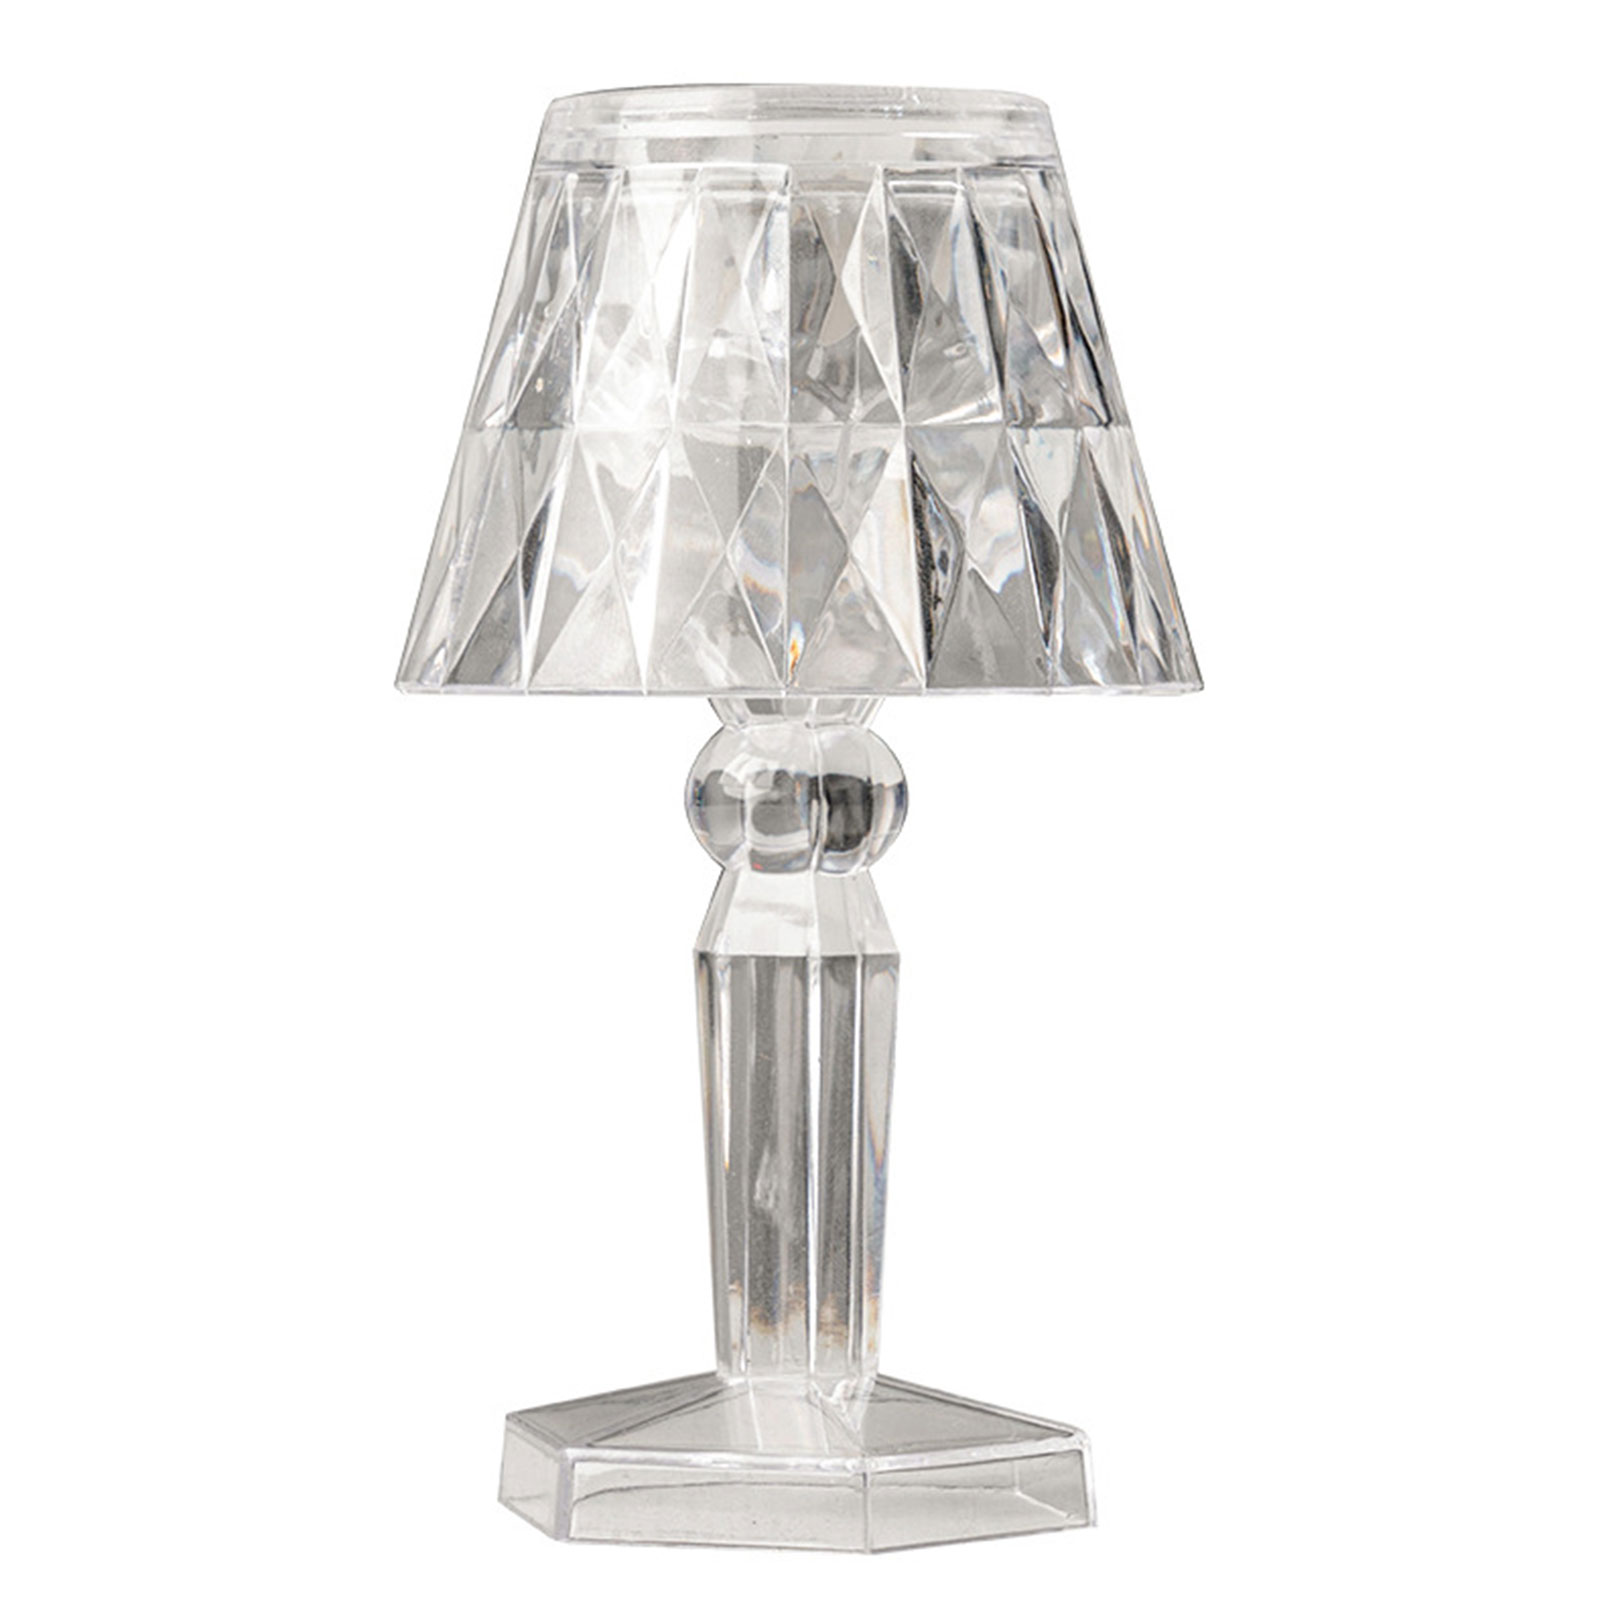 1Pcs LED Crystal Desk Lamp Projetor Acrylic Diamond Table Lamp LED Night Lights Bedside Lighting Light For Bedroom Decorations